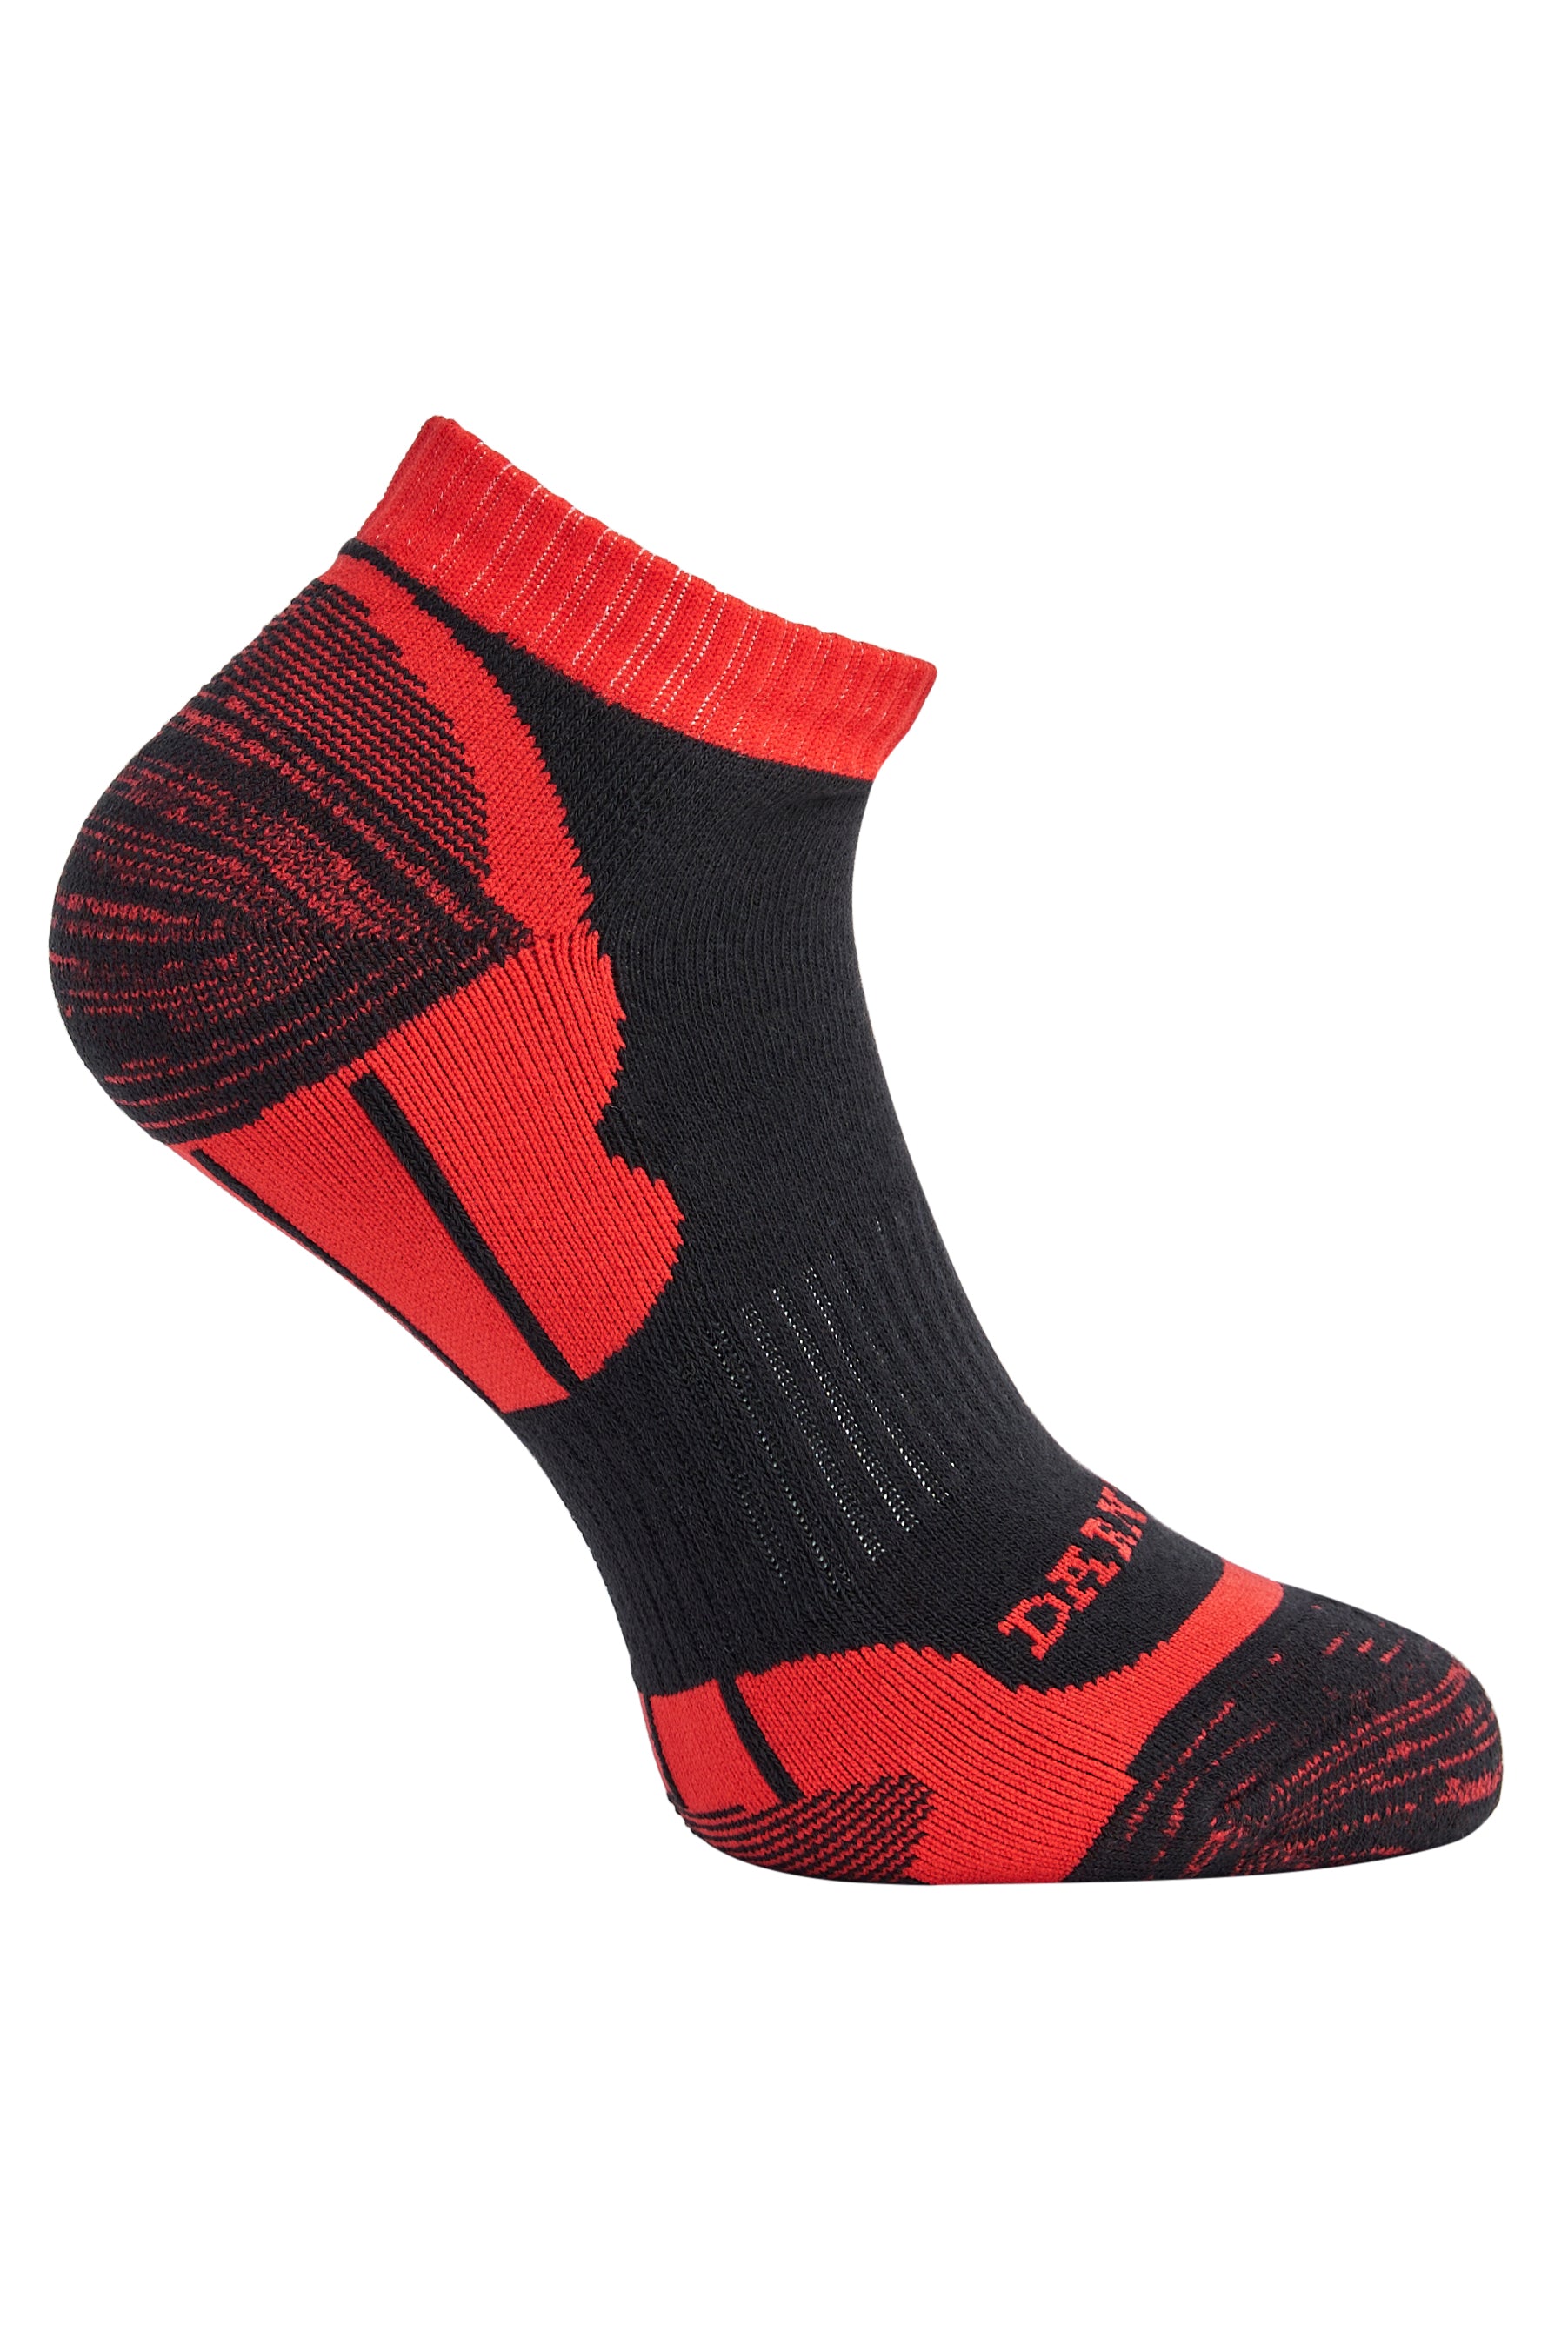 Side of Darn Tough Men's Sports Ankle Socks in Red